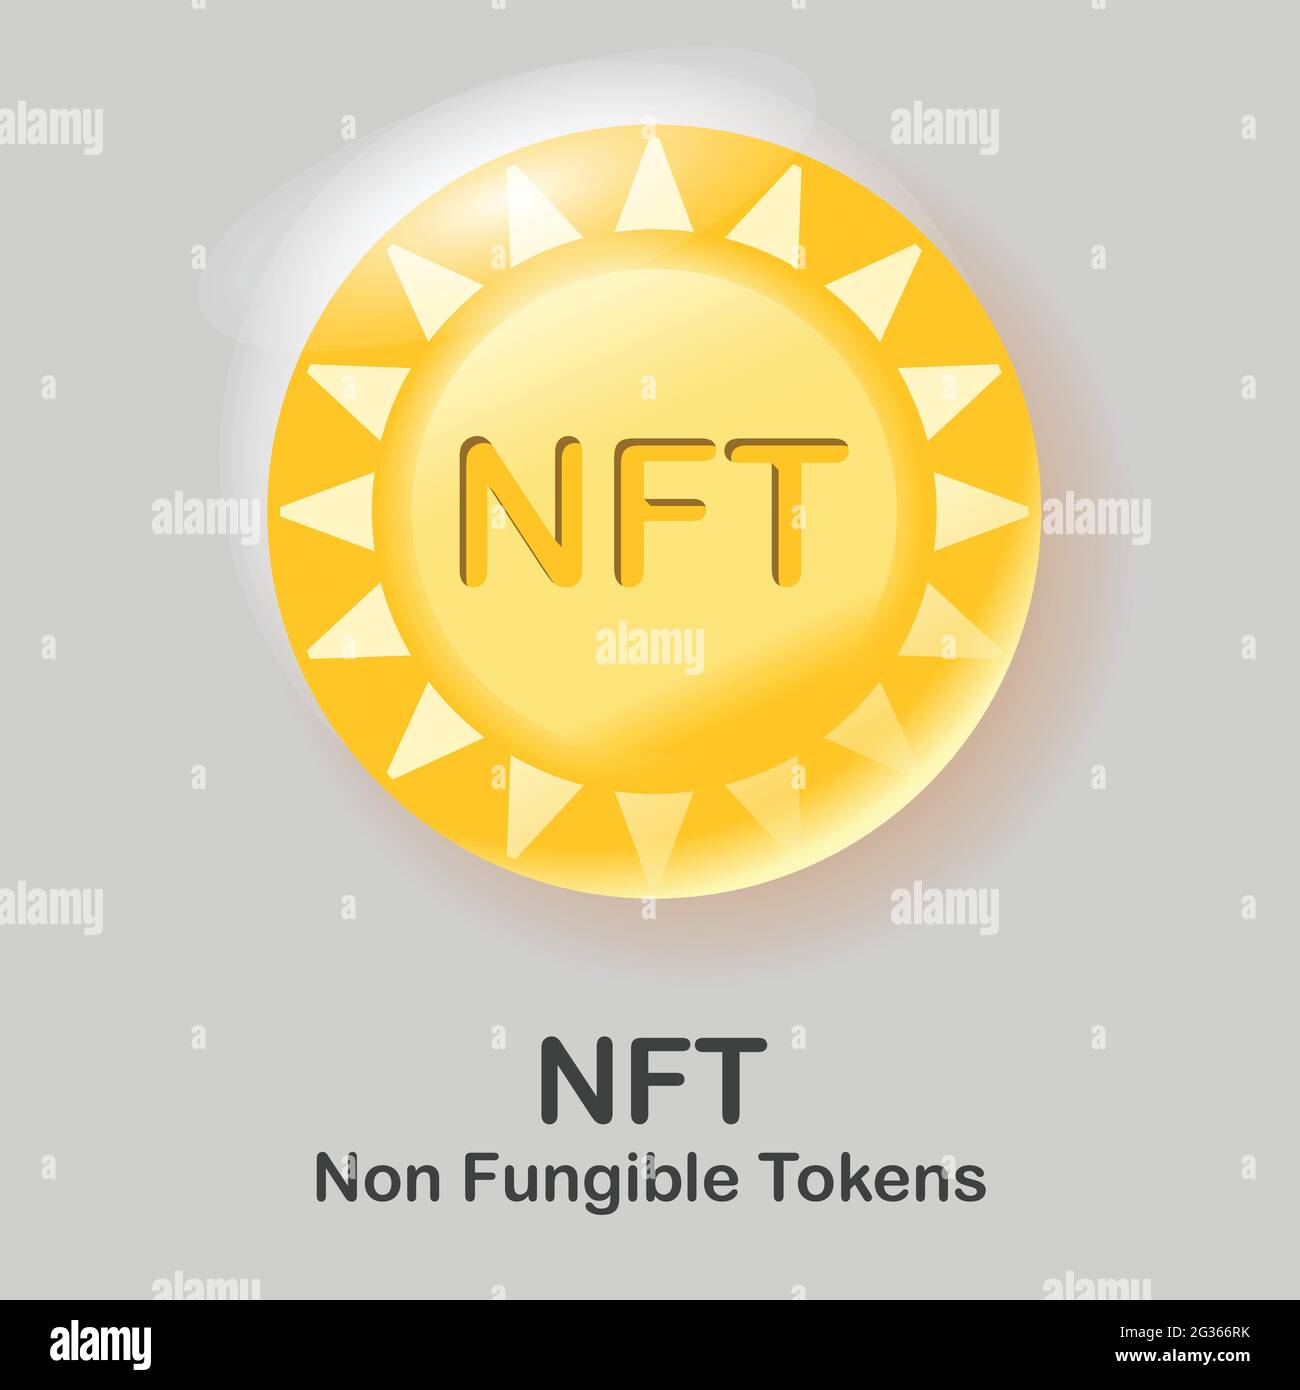 Non fungible tokens